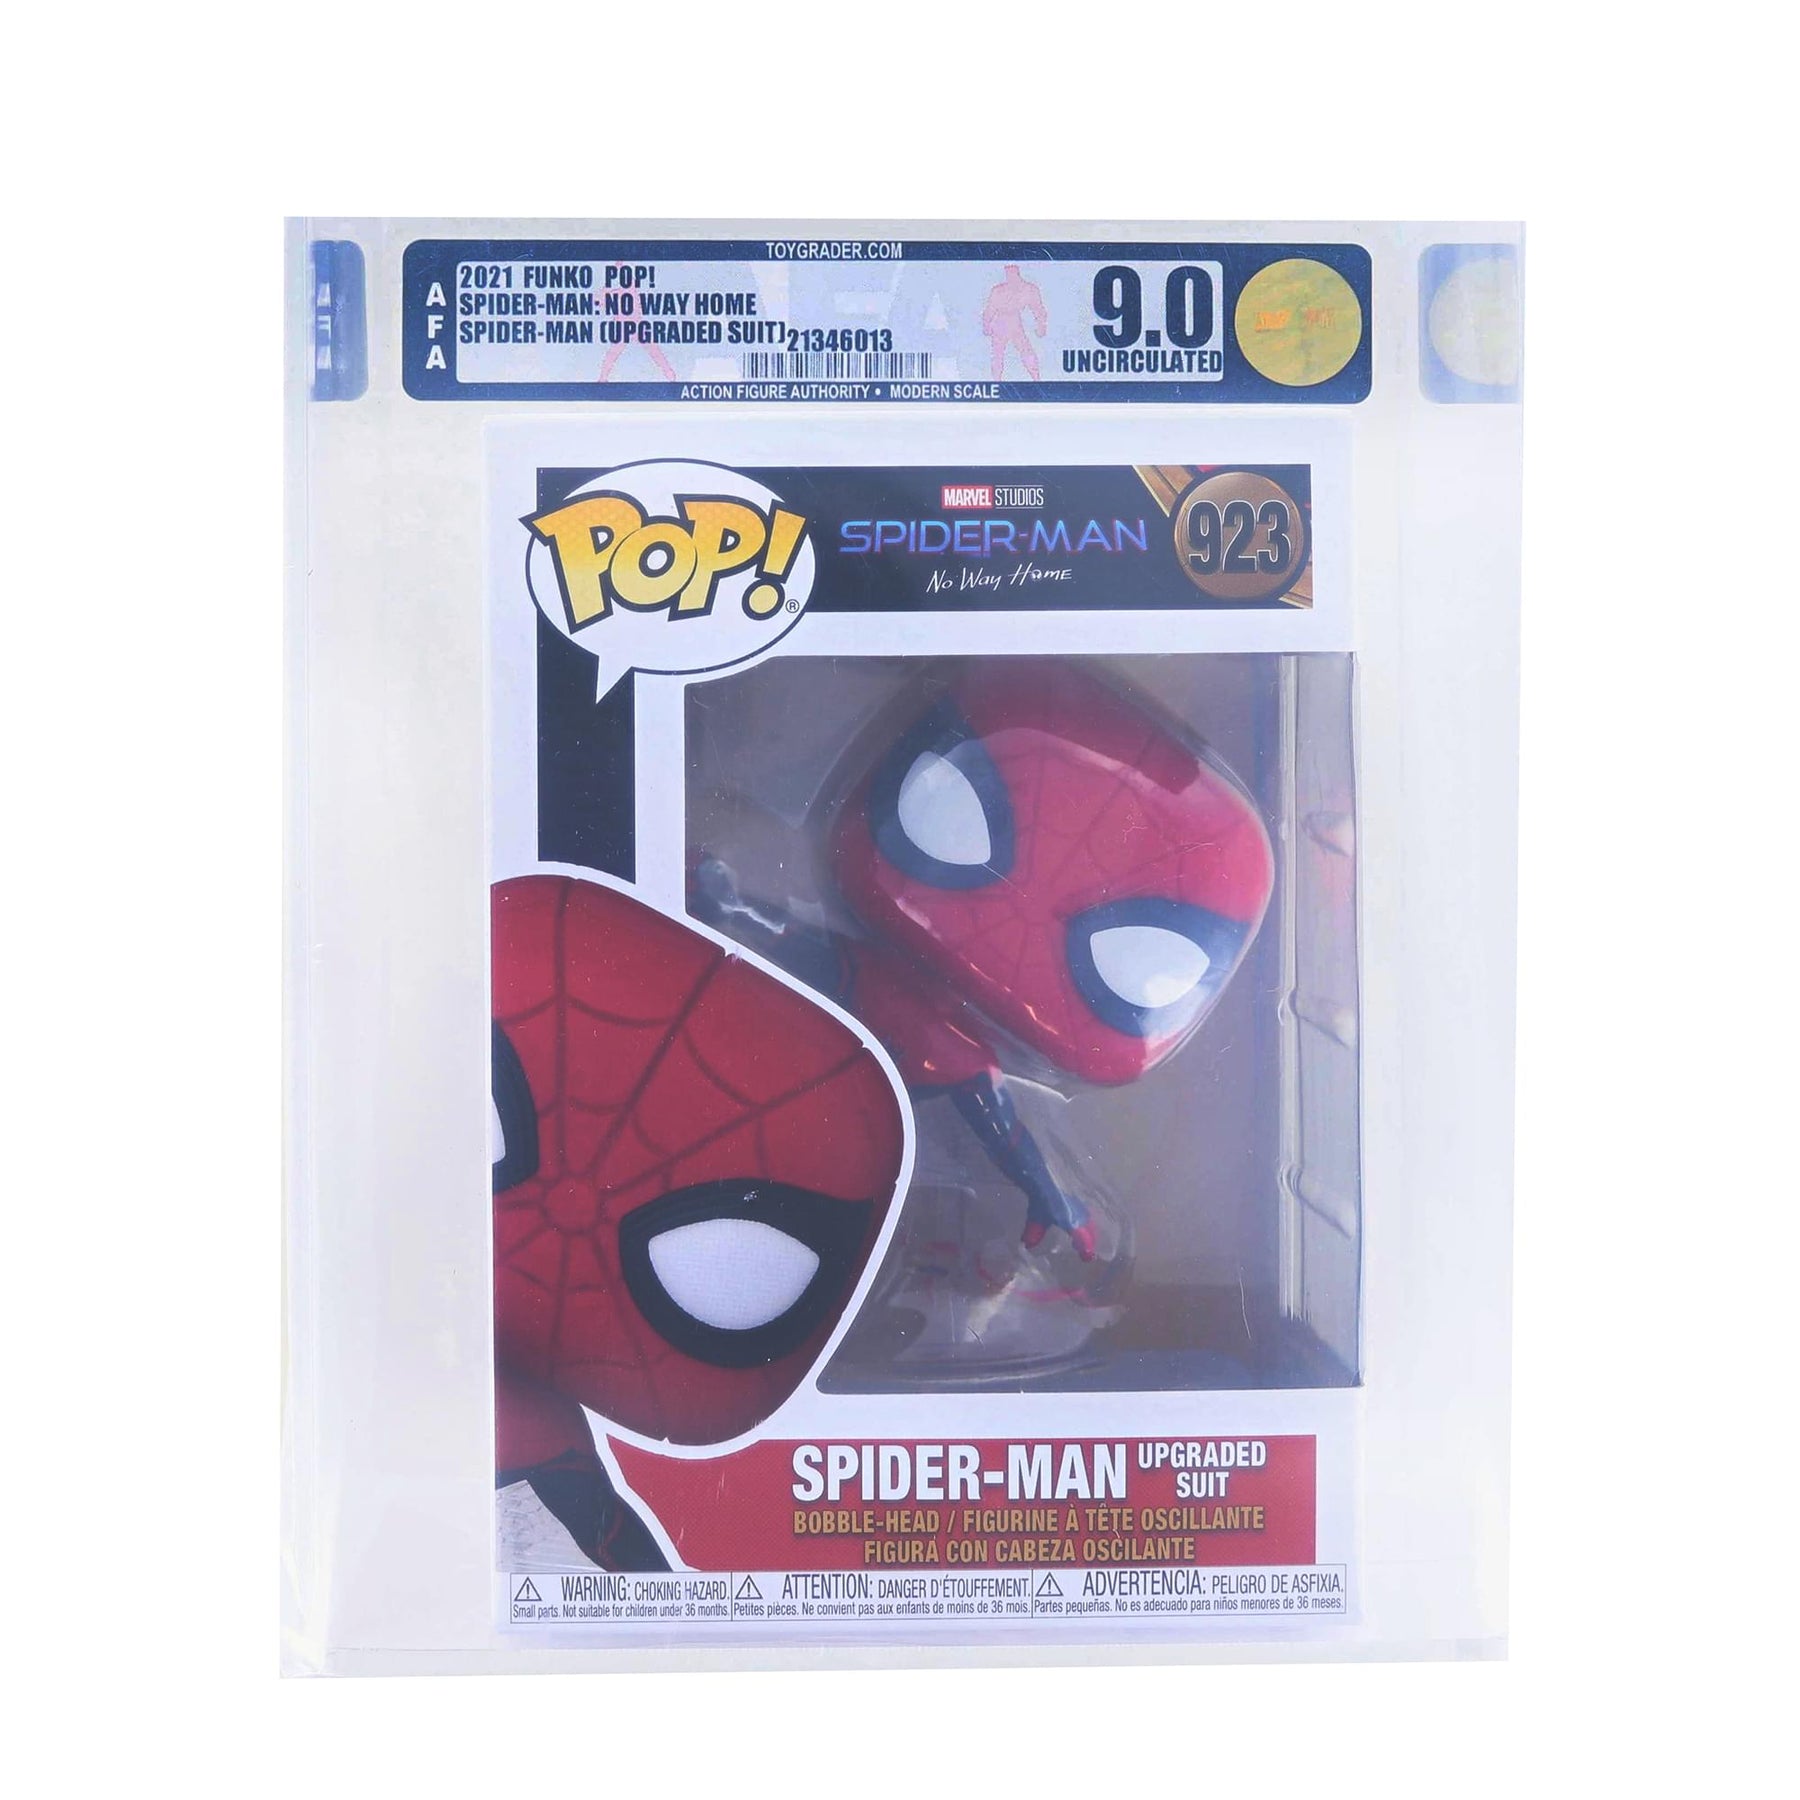 Costume enfant Spiderman - Marvel